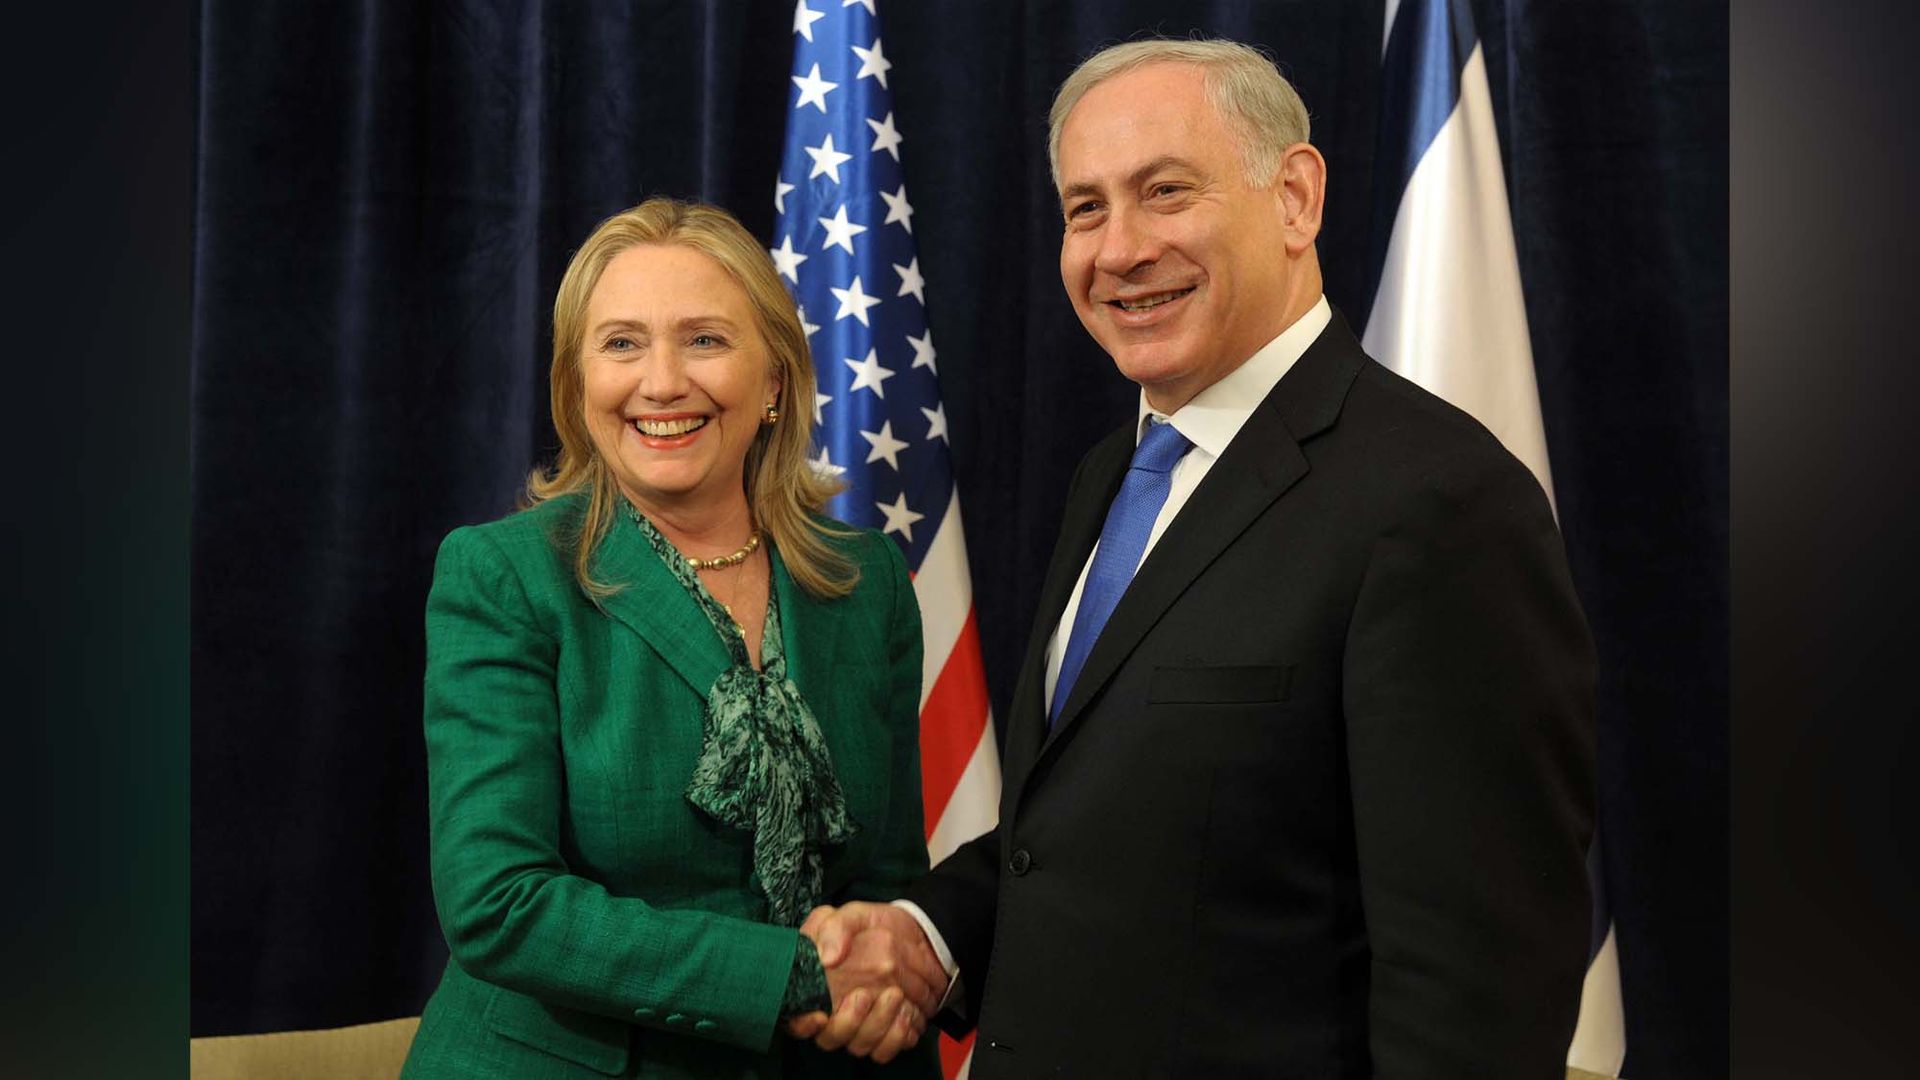 Benjamin Netanyahu and Hillary Clinton